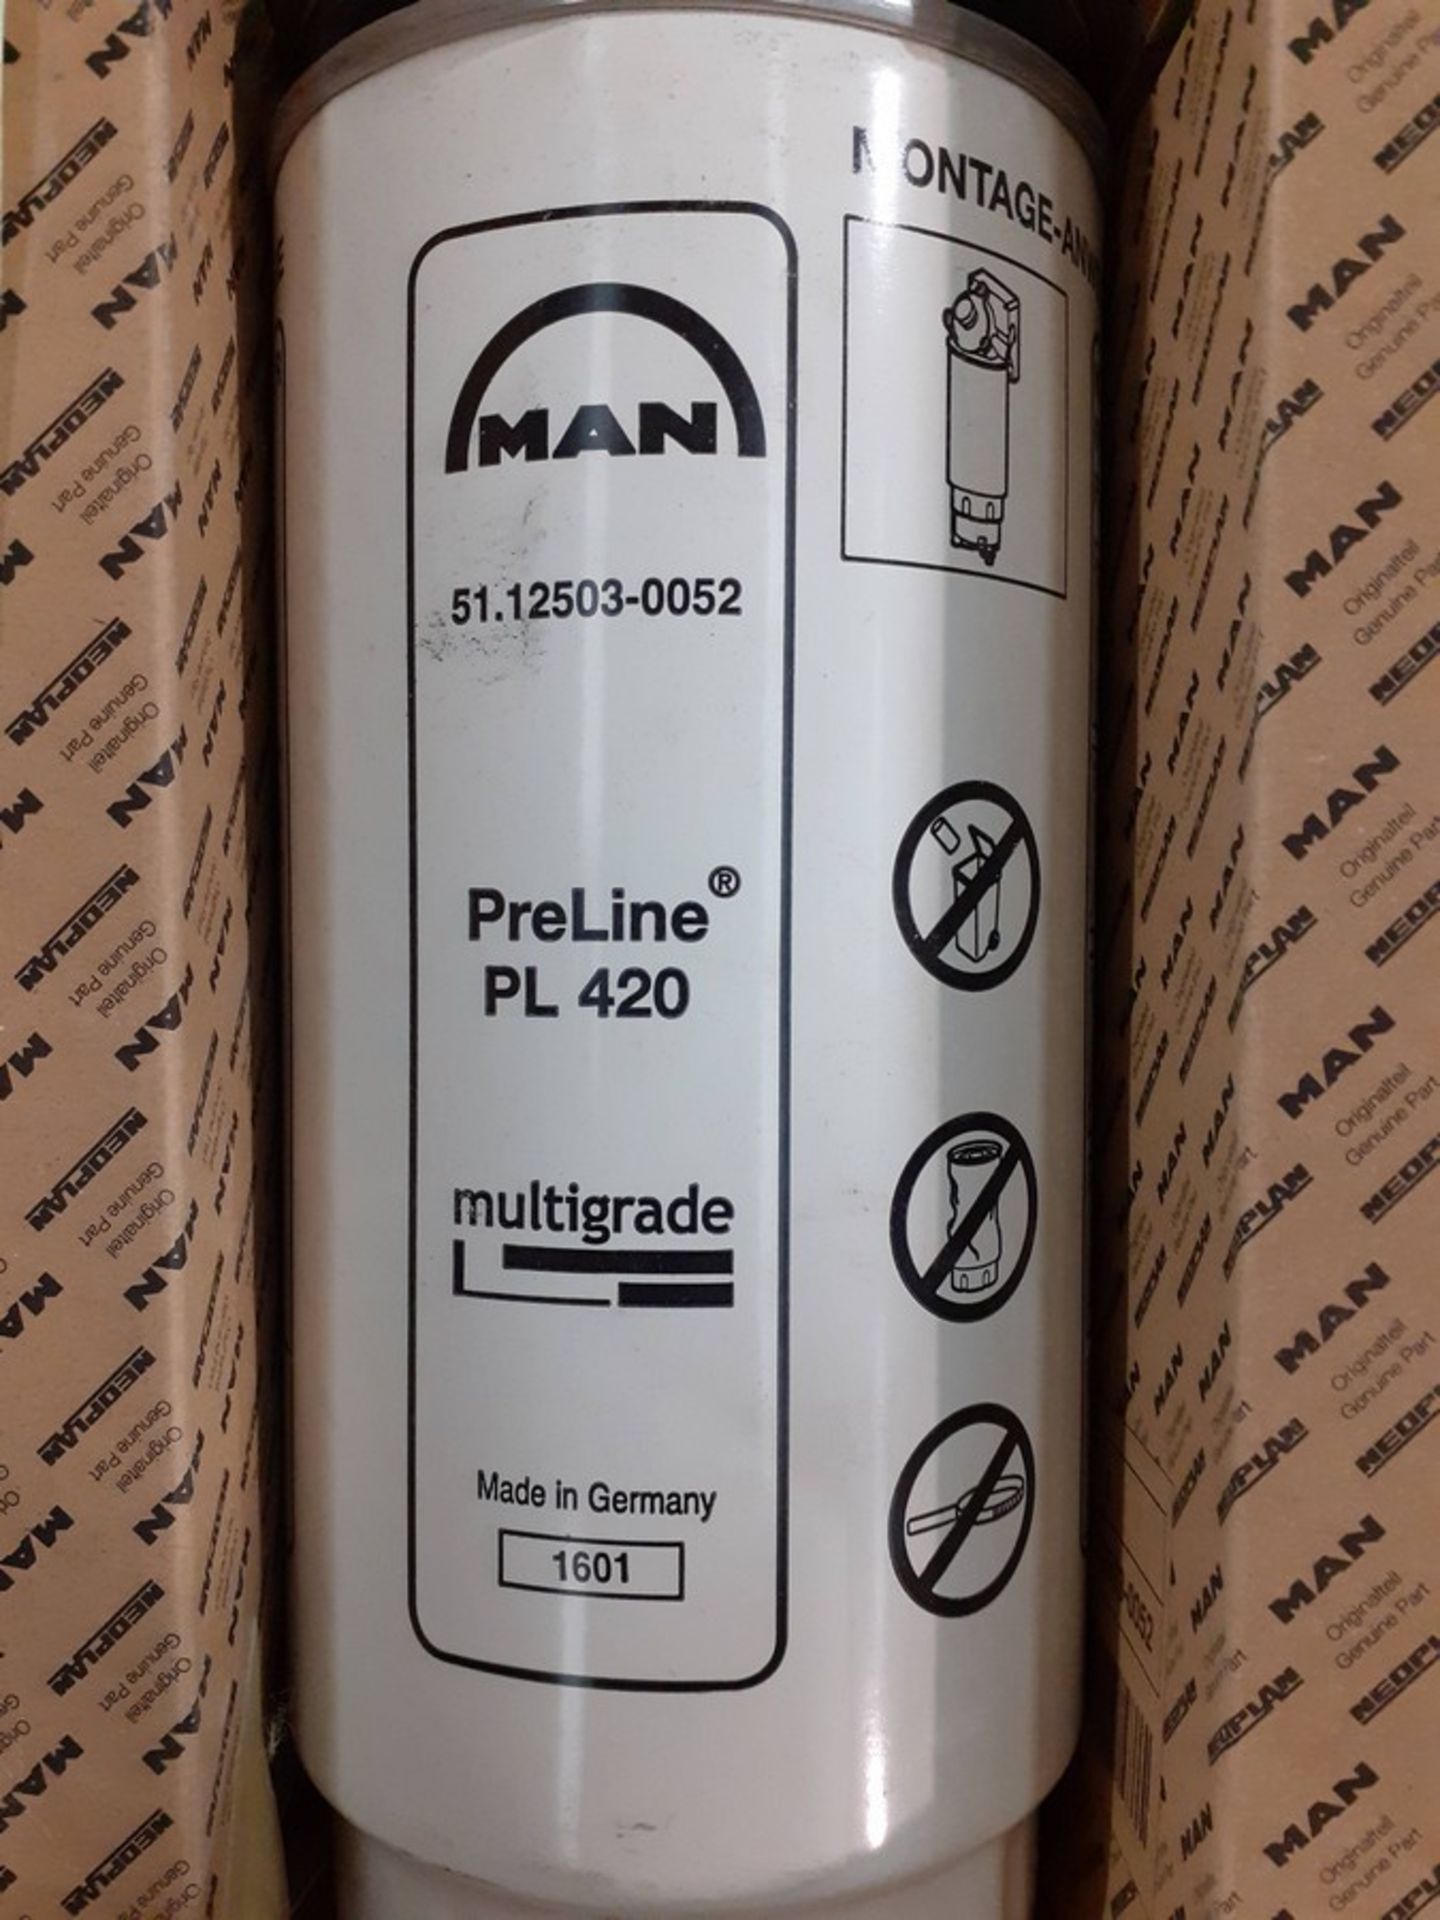 Mann fuel filter preline 4200 - 51.12503-0052 x 6 - Image 2 of 6